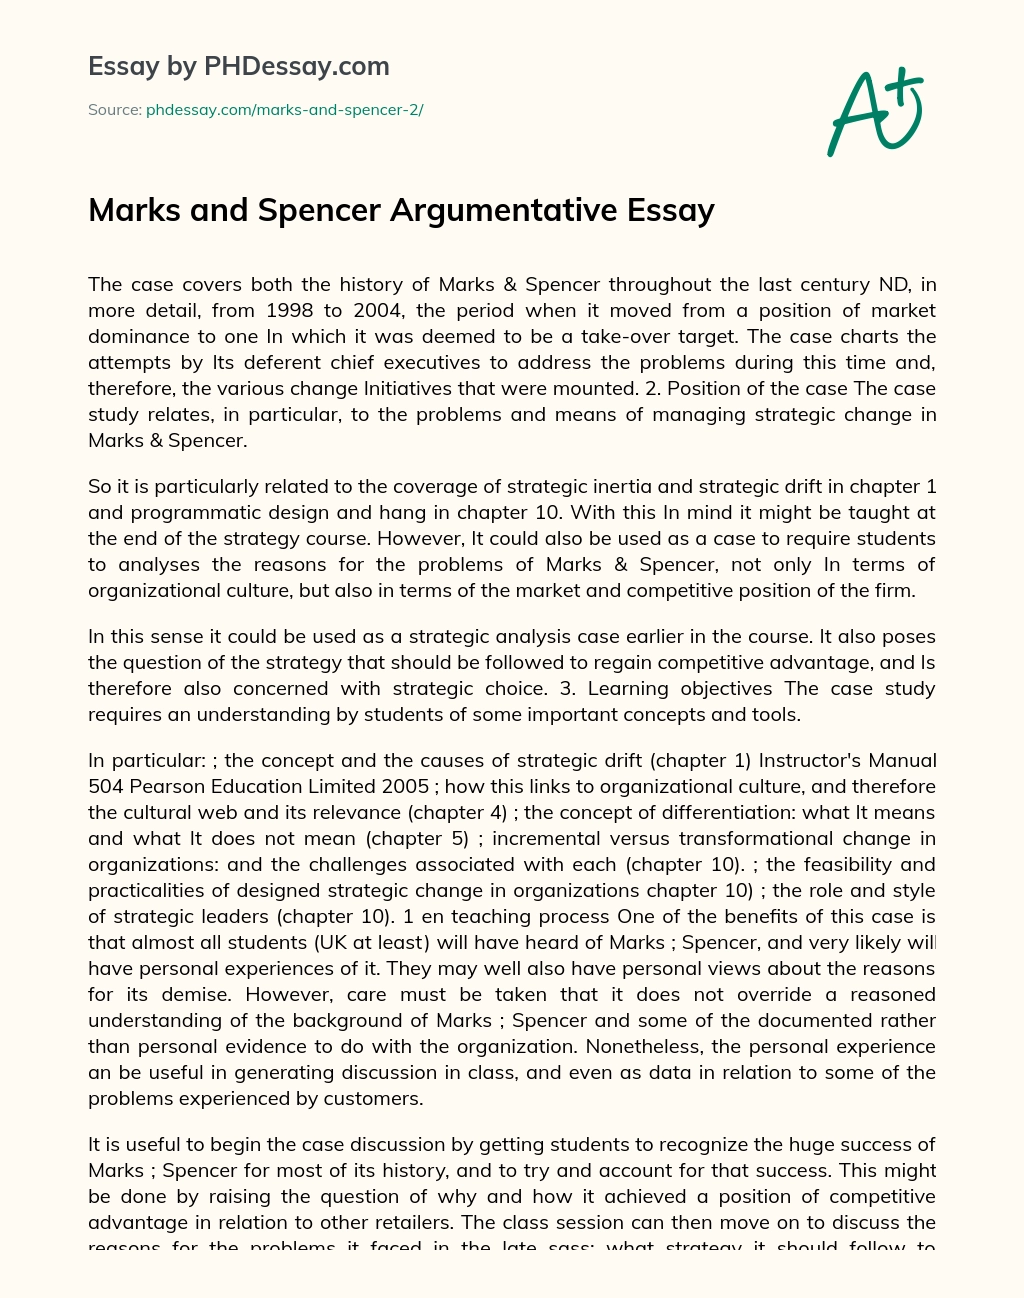 Marks and Spencer Argumentative Essay essay